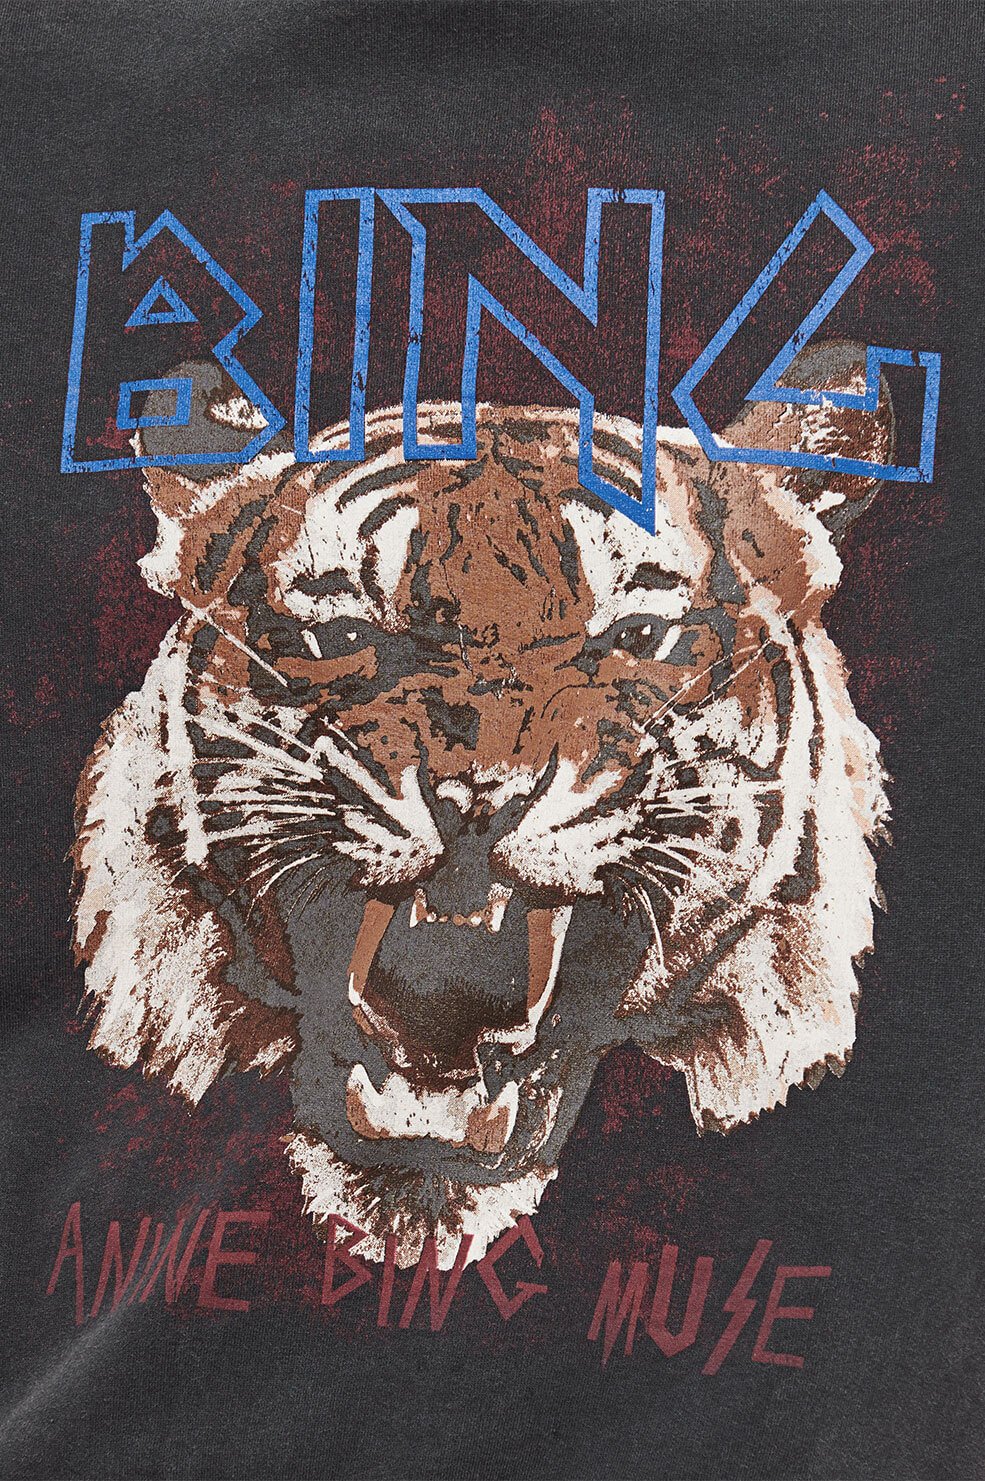 Anine Bing | Tiger Sweatshirt - Black